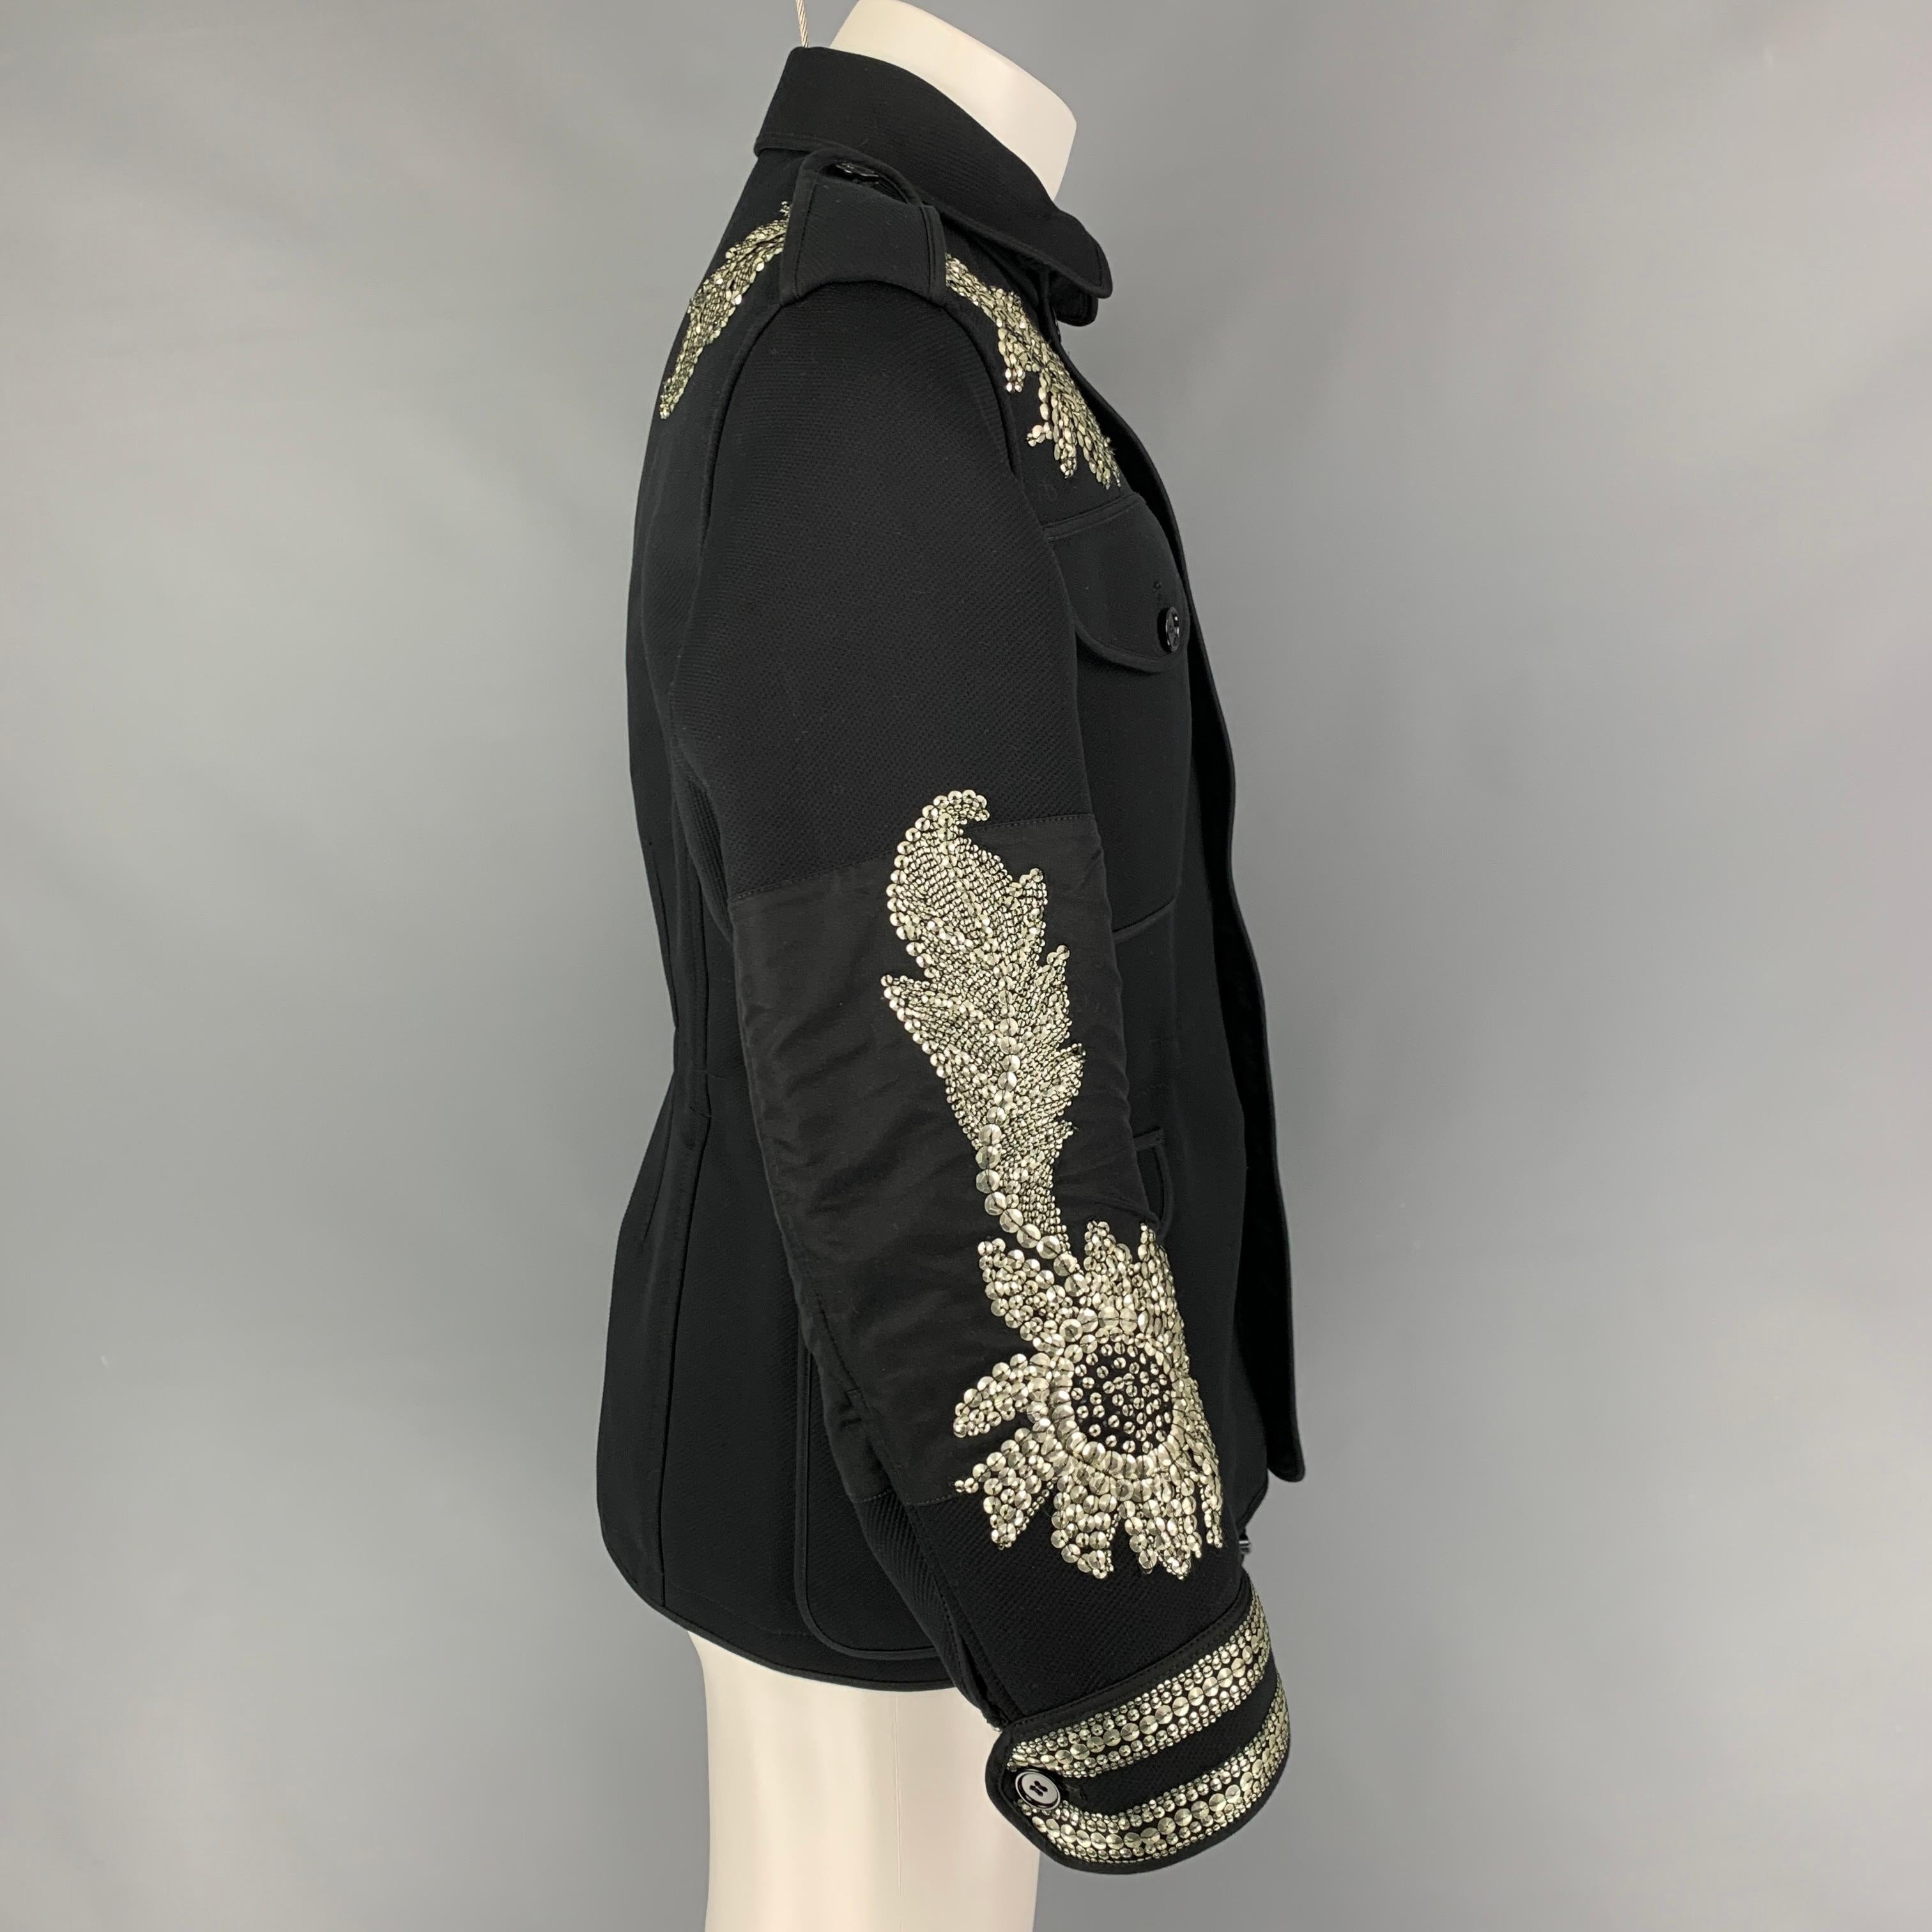 Men's ALEXANDER MCQUEEN SS 17 Size 38 Black Silver Floral Military Regalia Coat